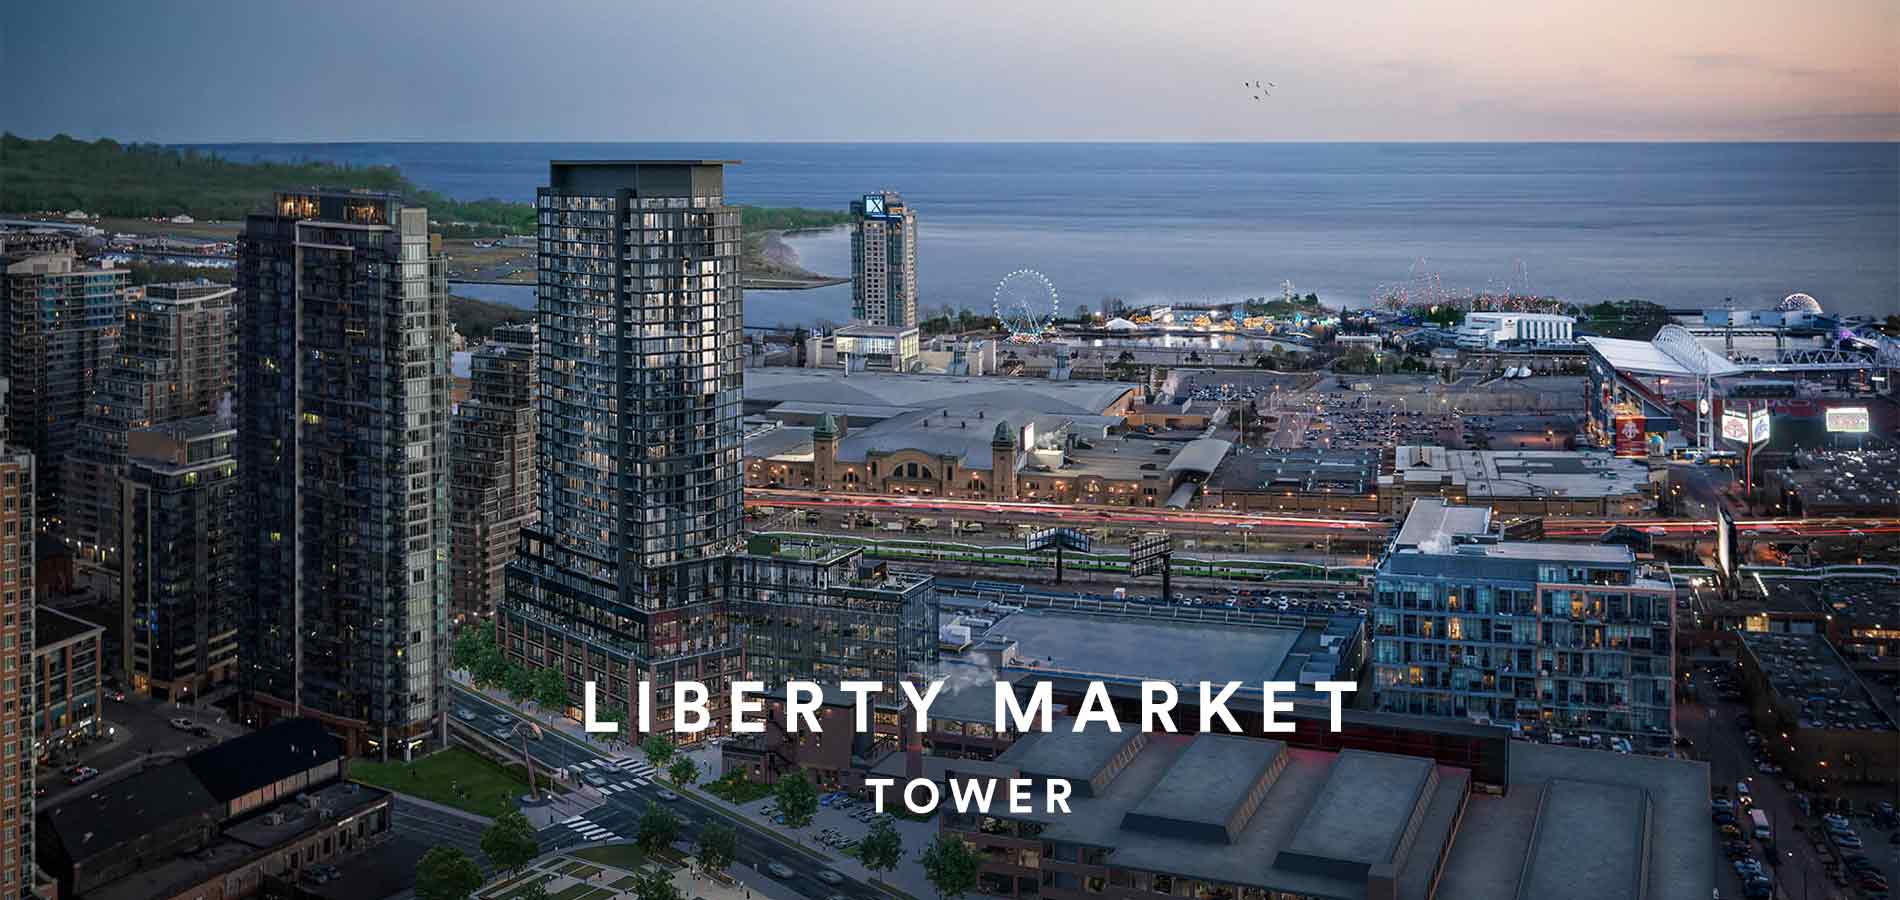 Liberty Market Tower condos